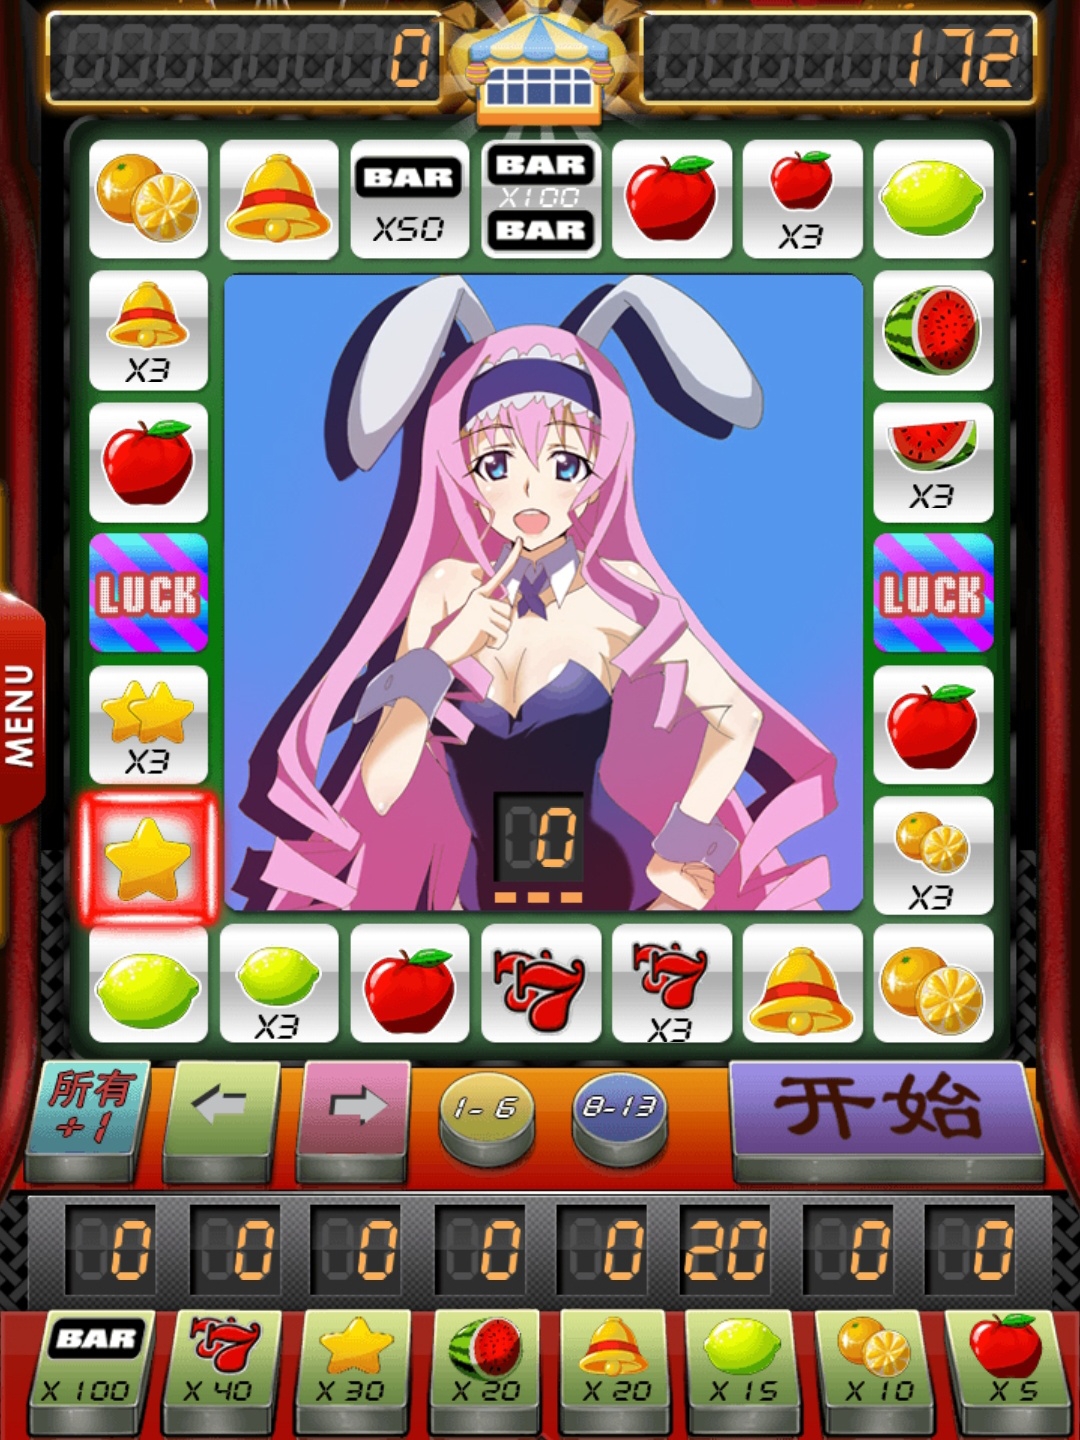 Grand Slam Fruit Machine Mobile Game Standalone Android Hongmeng Nostalgia Game Non Apple Fruit Machine Download